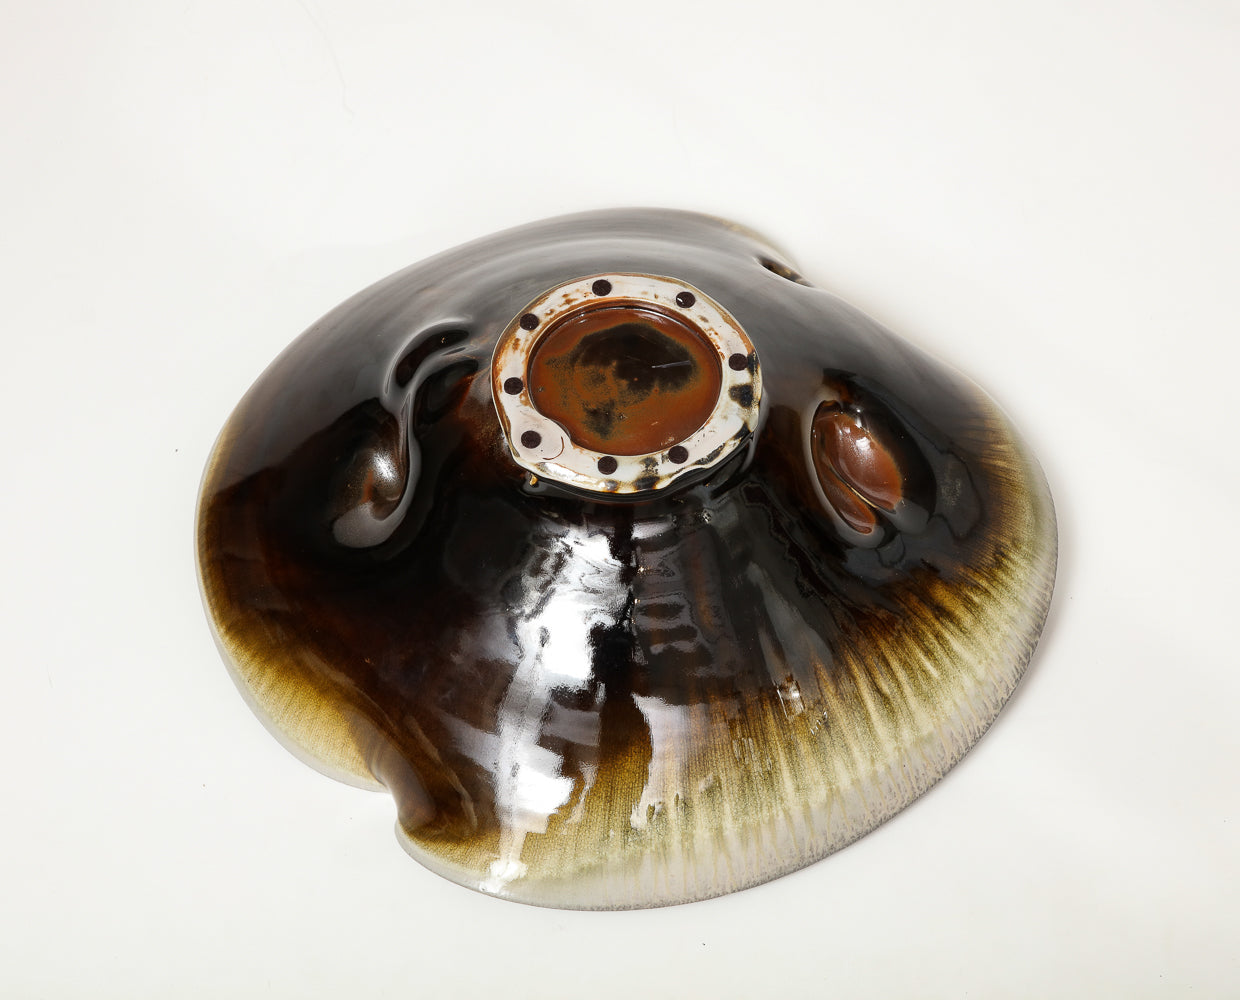 Glazed Porcelain Bowl No. 202003 by Chris Gustin